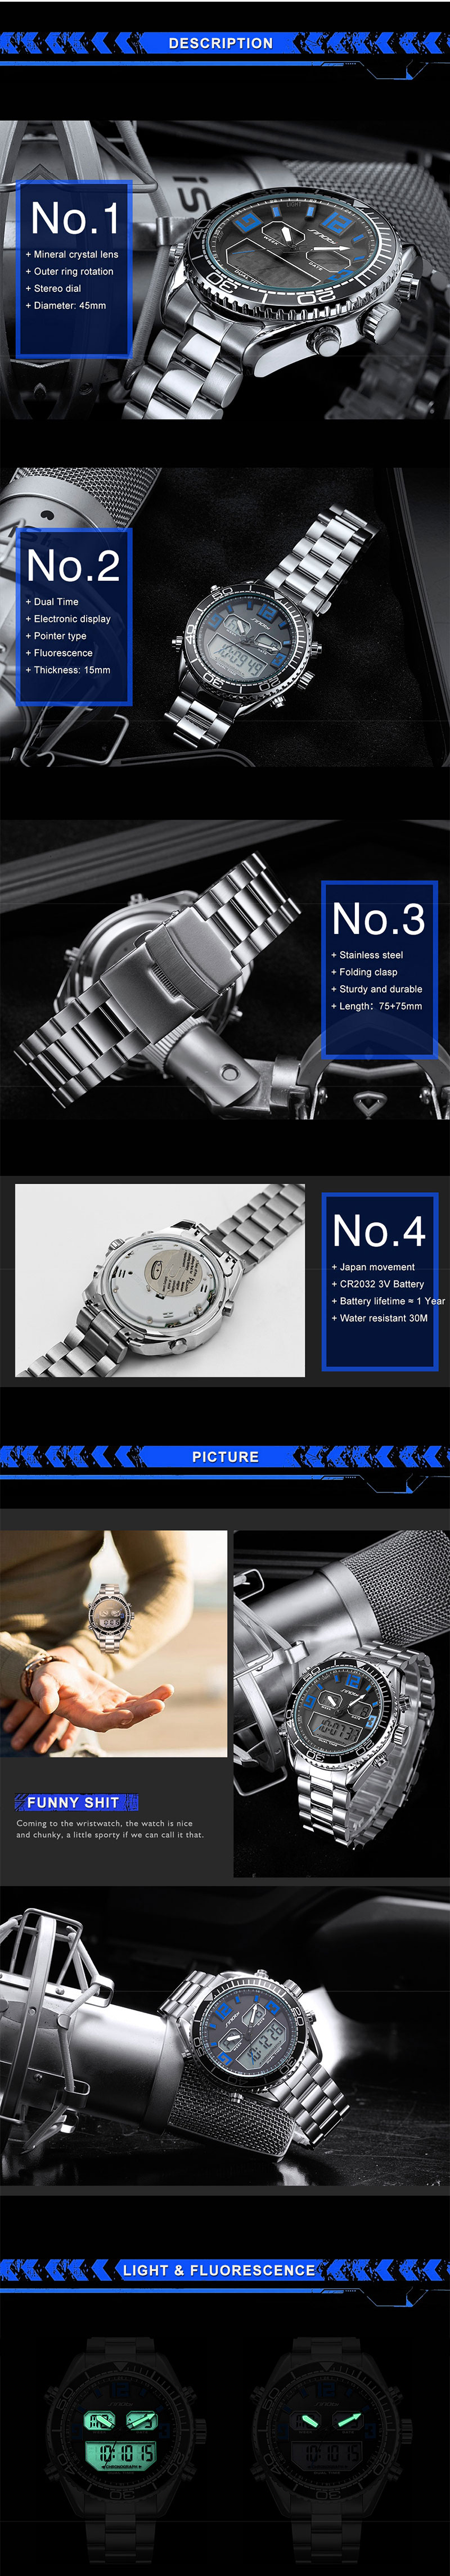 SINOBI-9731-Dual-Display-Digital-Watch-Men-Chronograph-Luminous-Display-Watch-Fashion-Outdoor-Watch-1293383